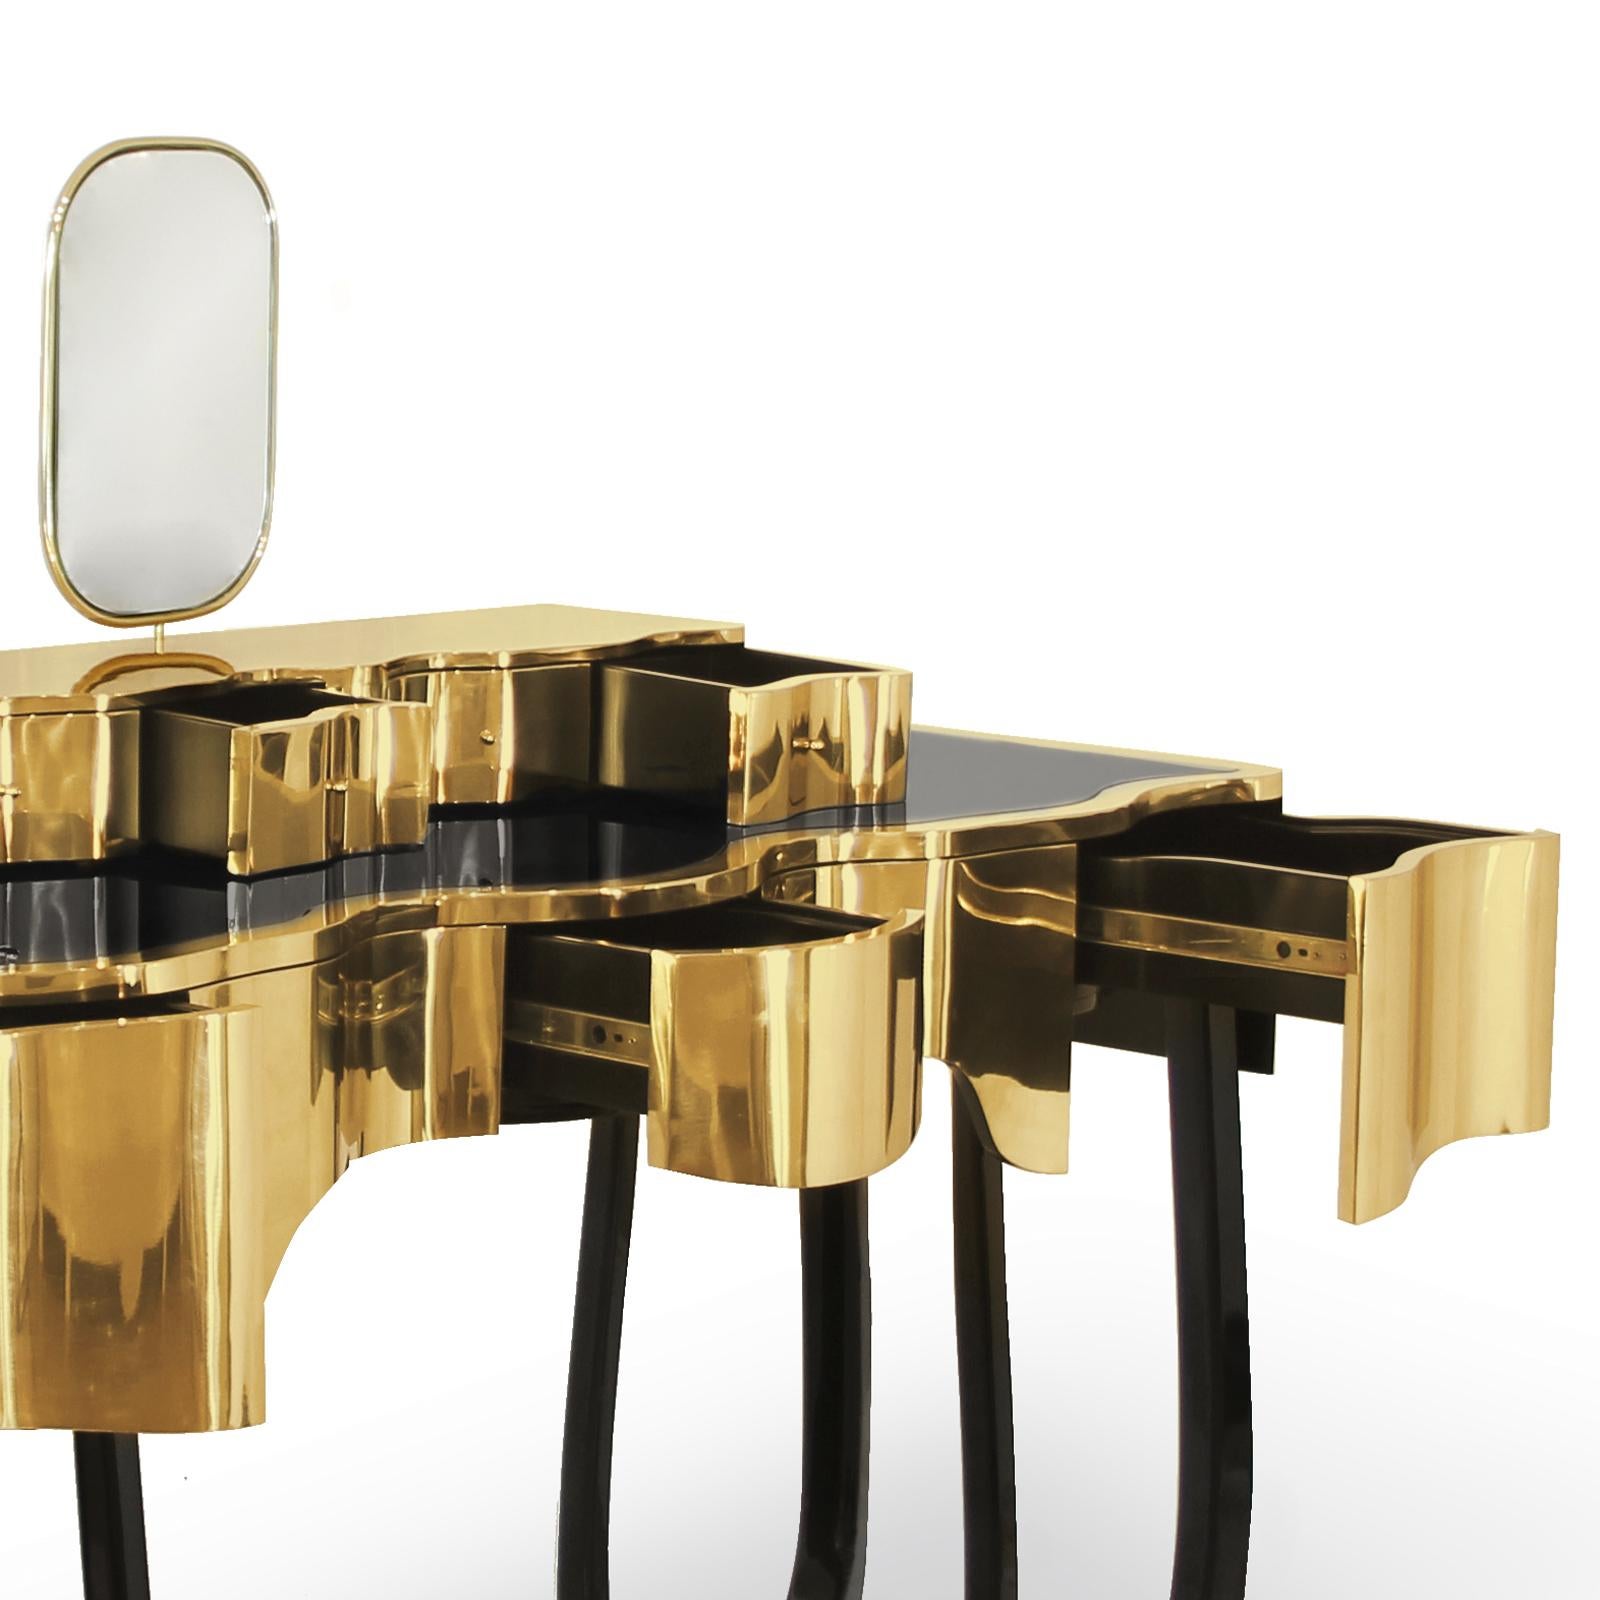 Portuguese Curvy Mirror Room Console Table For Sale